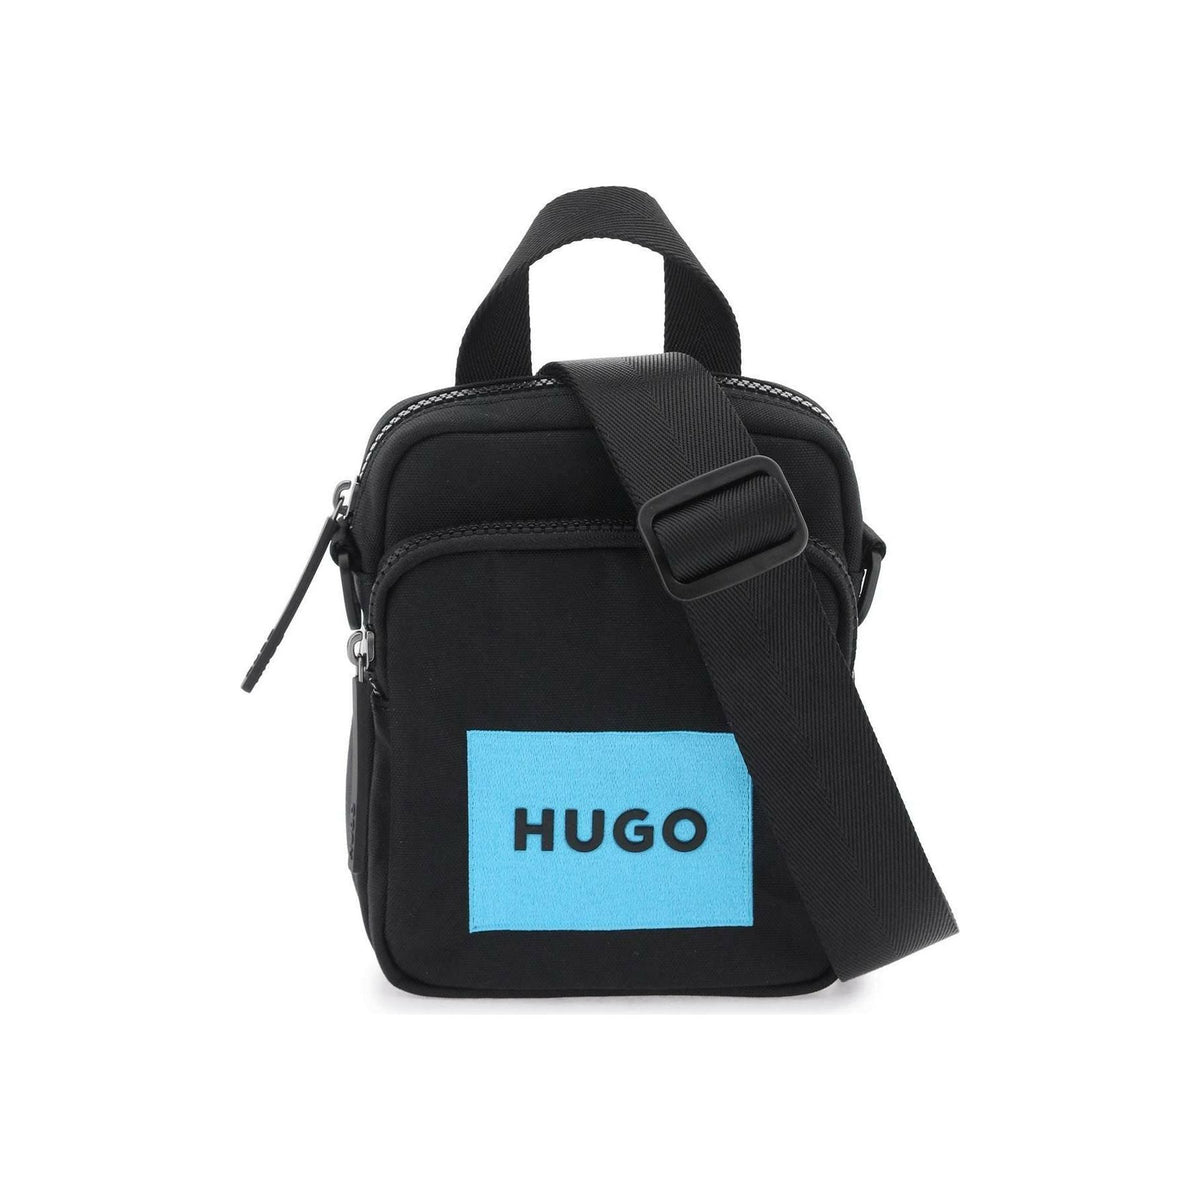 Black Recycled Nylon Adjustable Strap Bag HUGO JOHN JULIA.